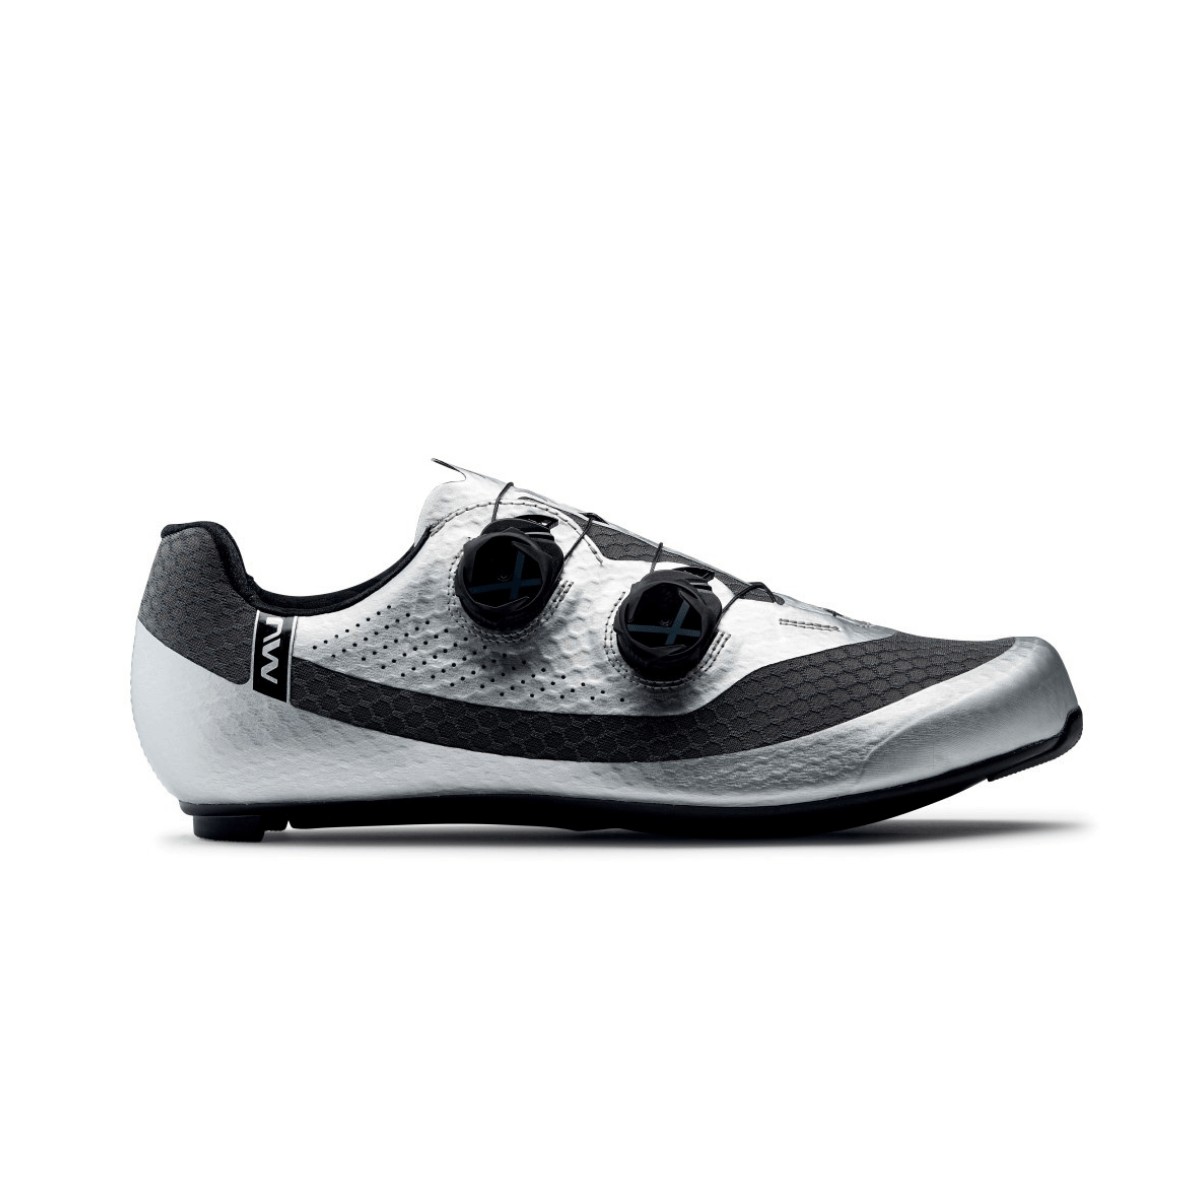 Northwave Mistral Plus Shoes Silver, Size 42 - EUR